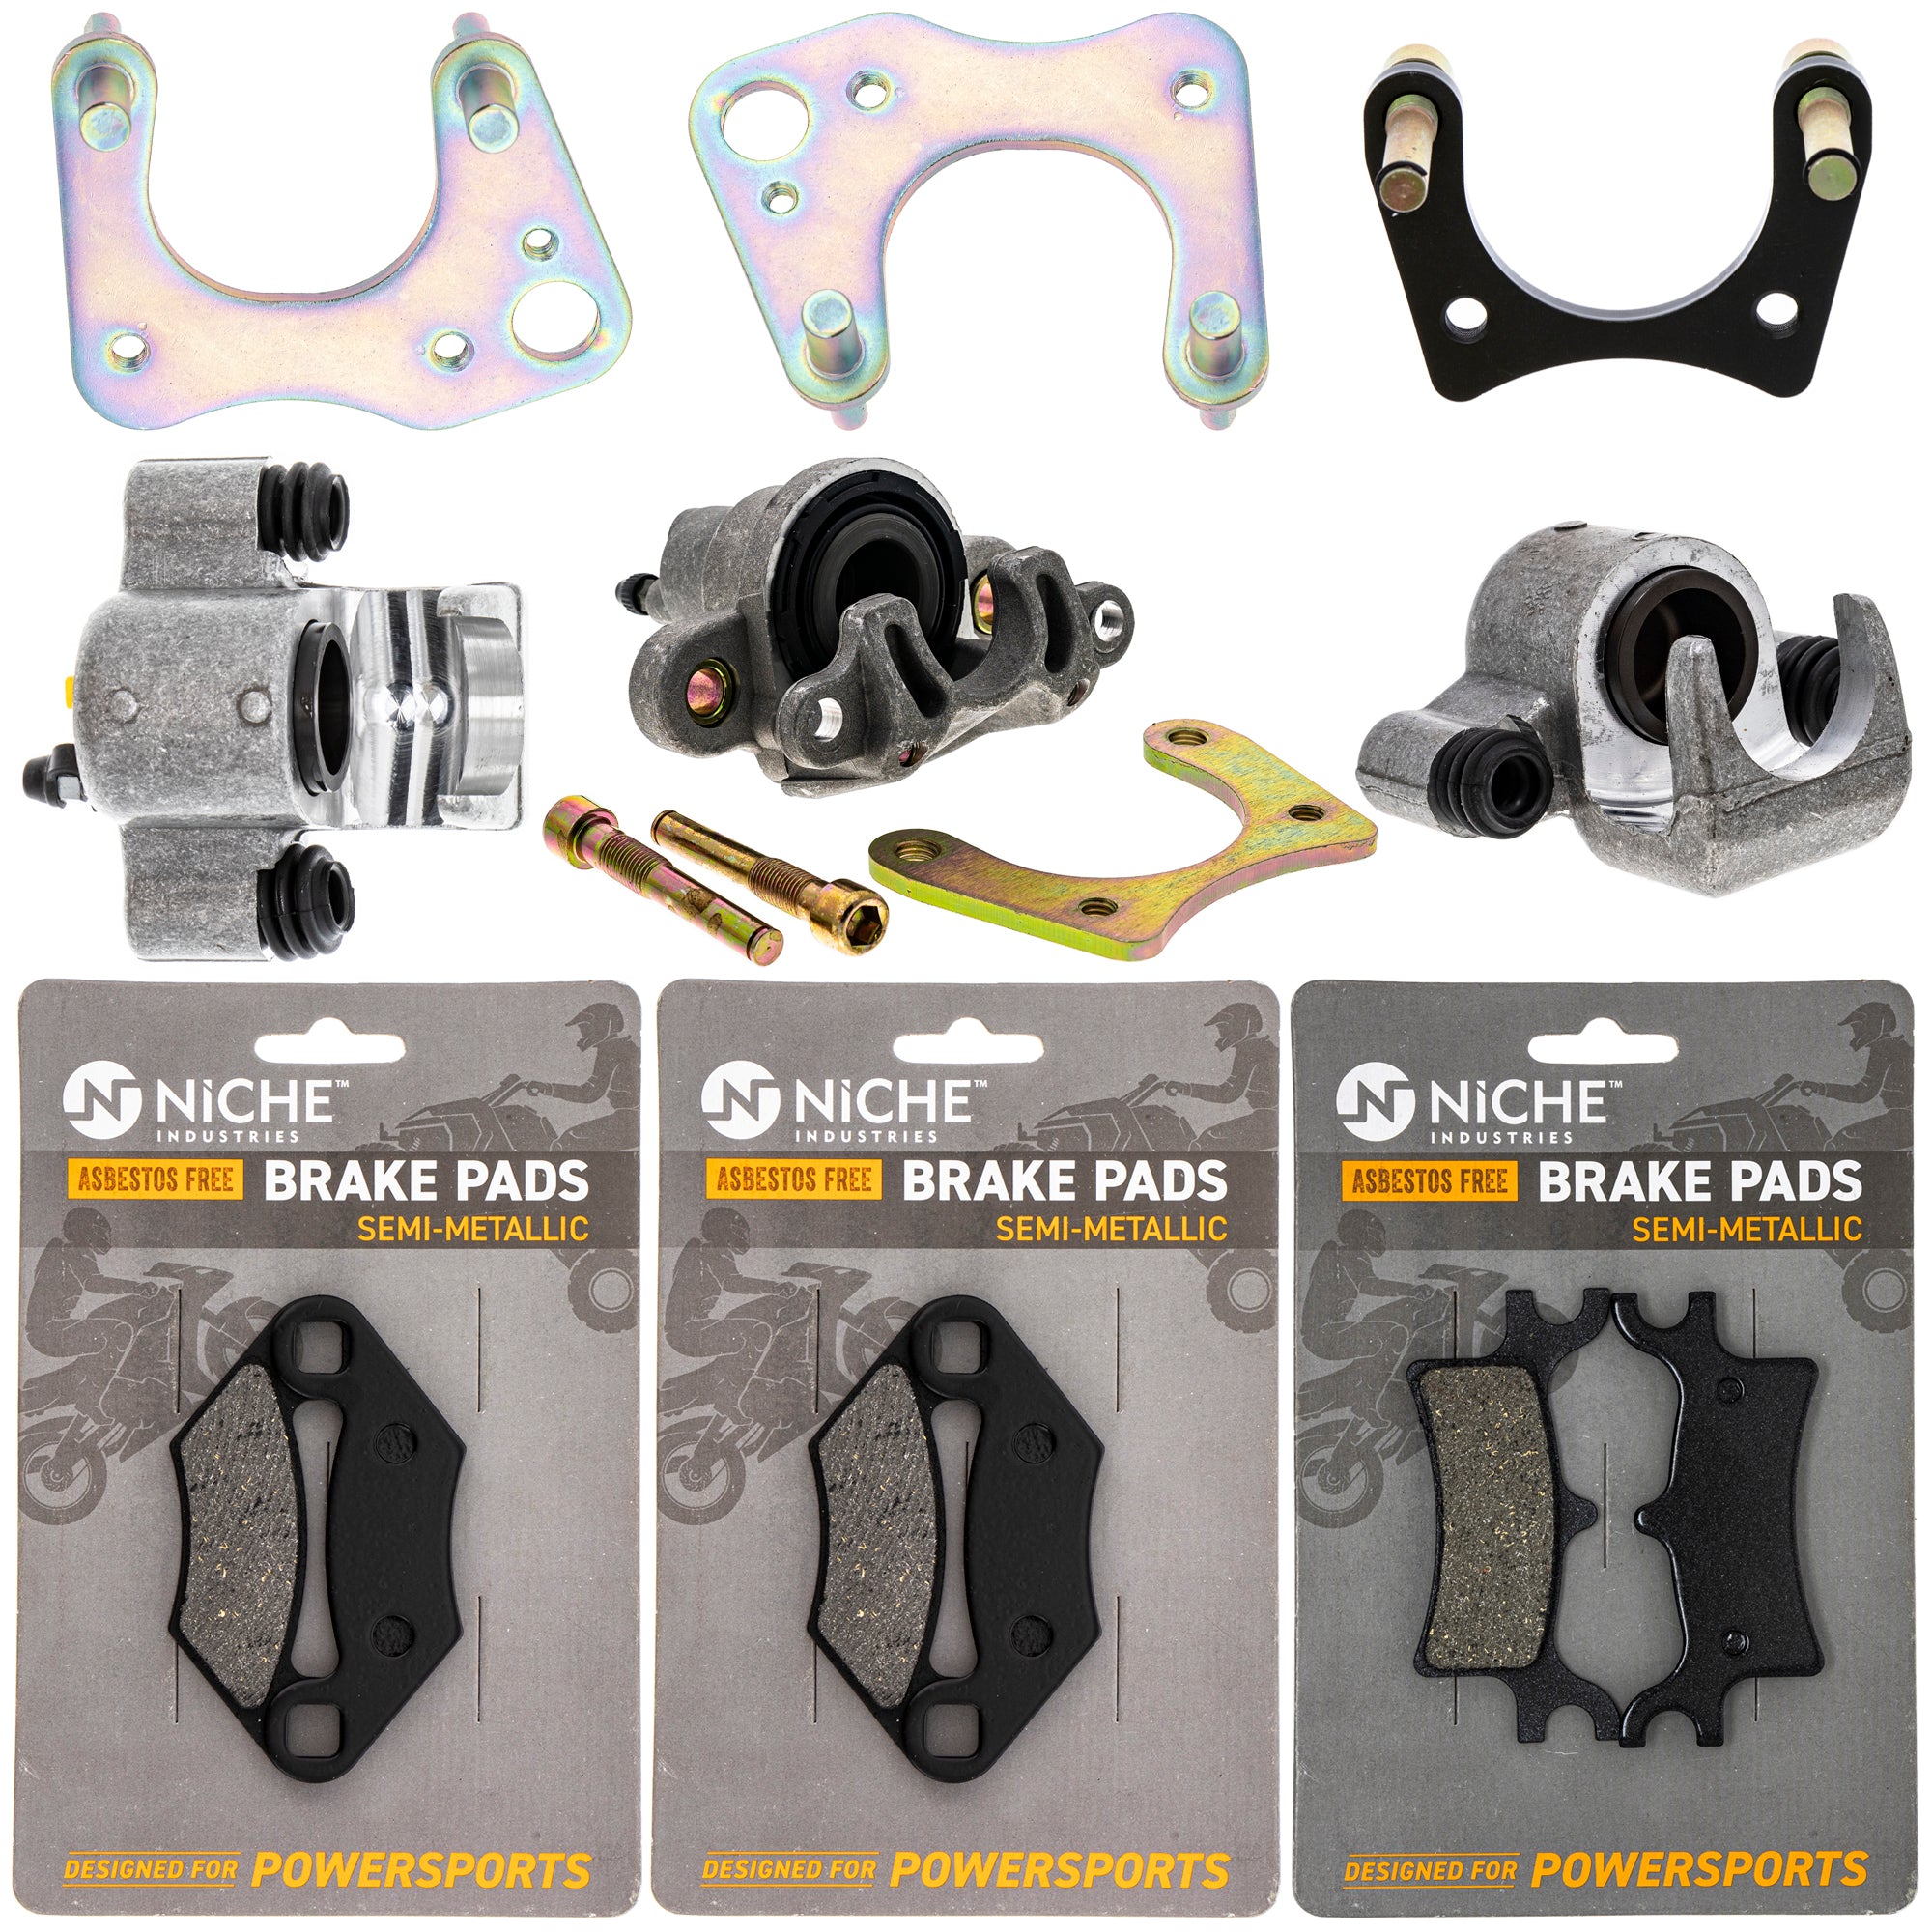 Brake Rebuild Kit Calipers & Pads (3) for zOTHER Polaris GEM Sportsman NICHE MK1008212